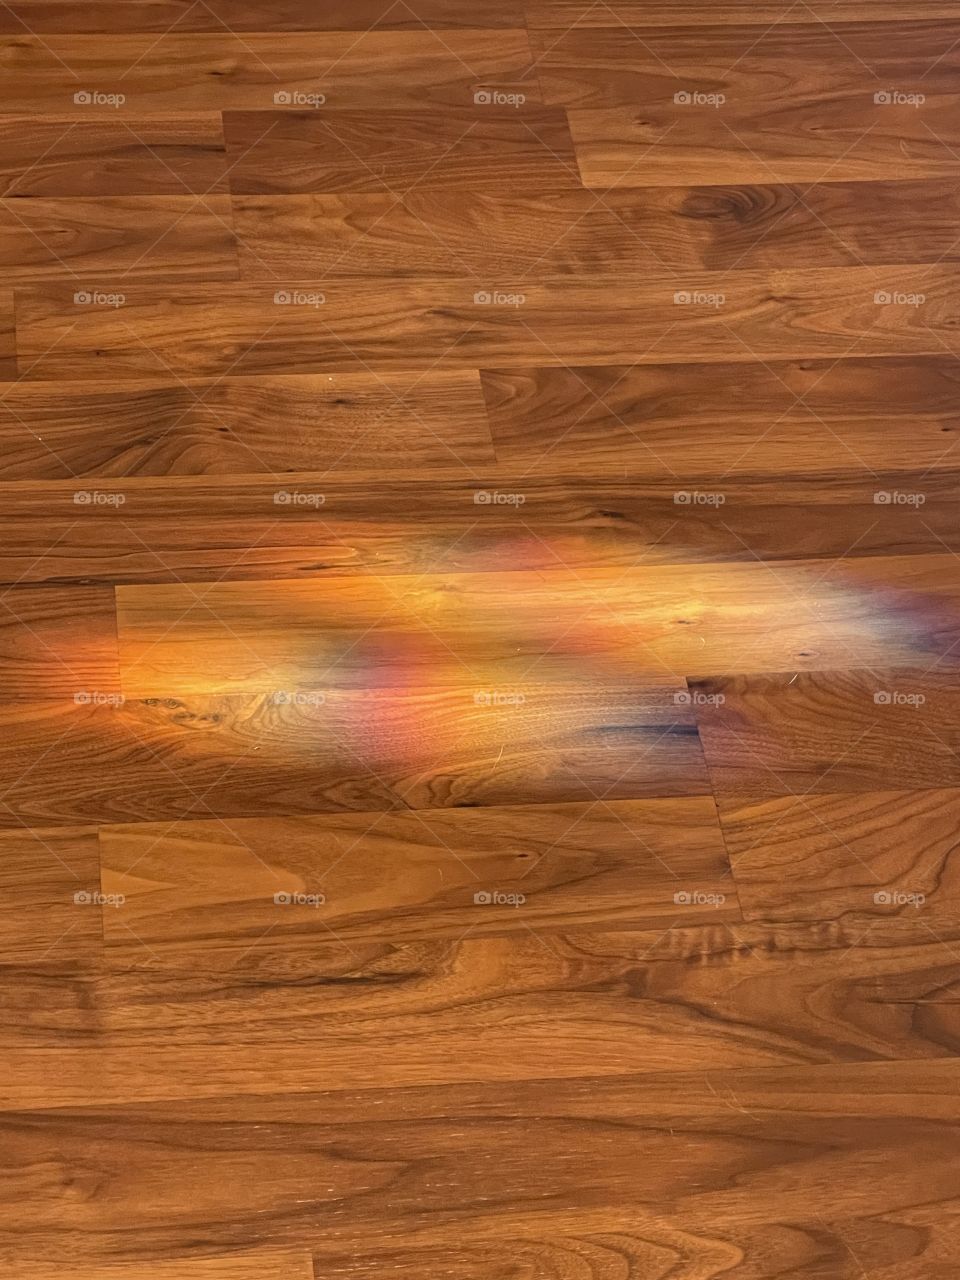 Rainbow on the floor